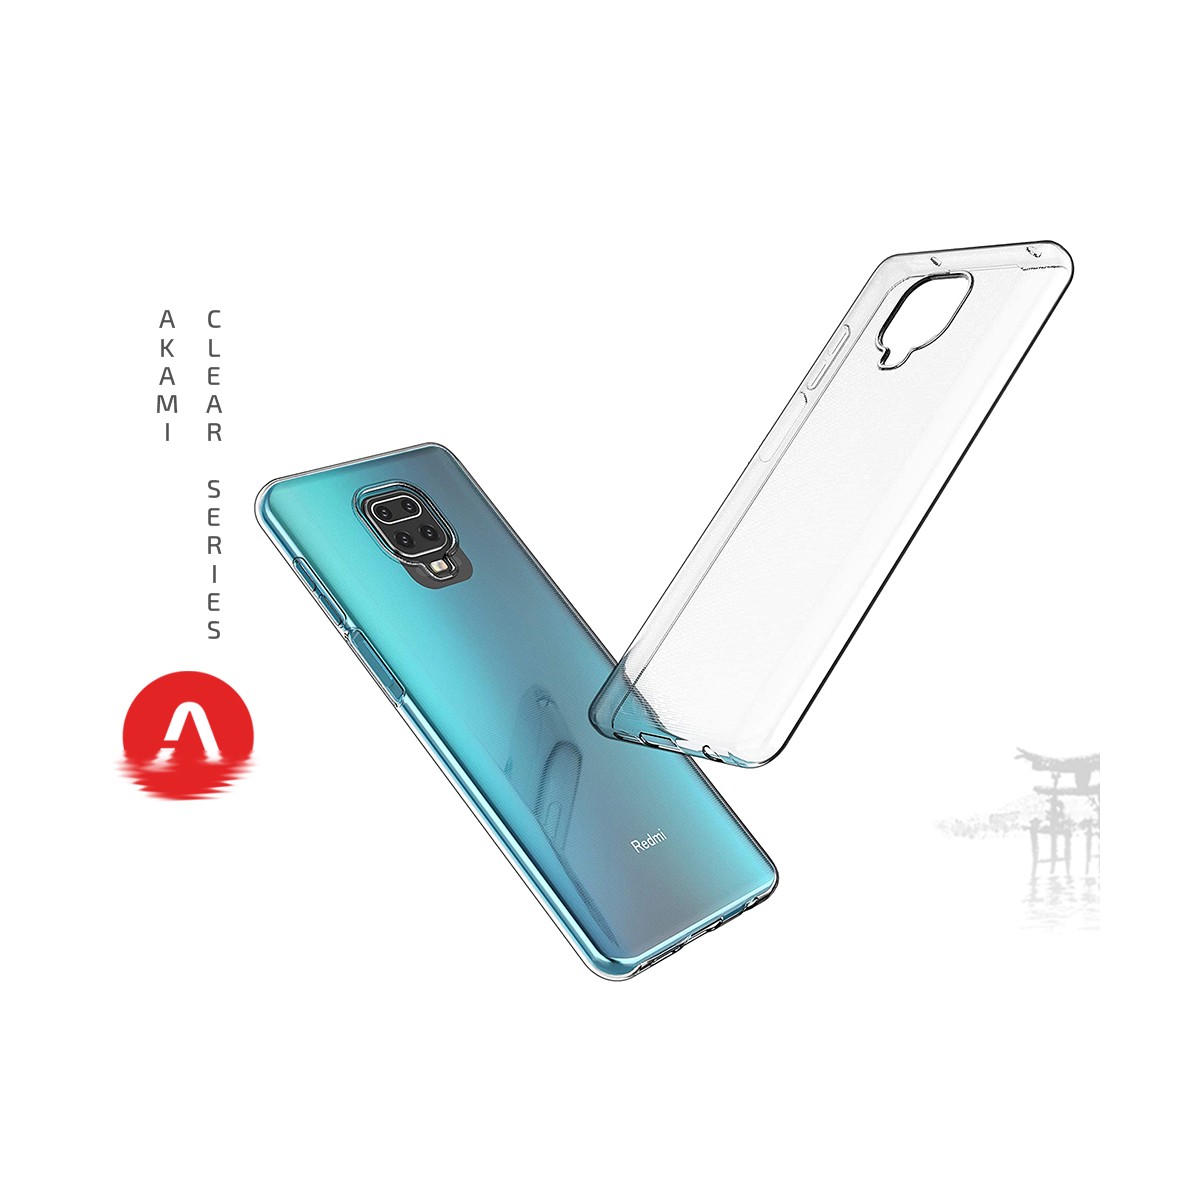 Akami coque pour Xiaomi Redmi Note 9 Pro en silicone de haute qualité